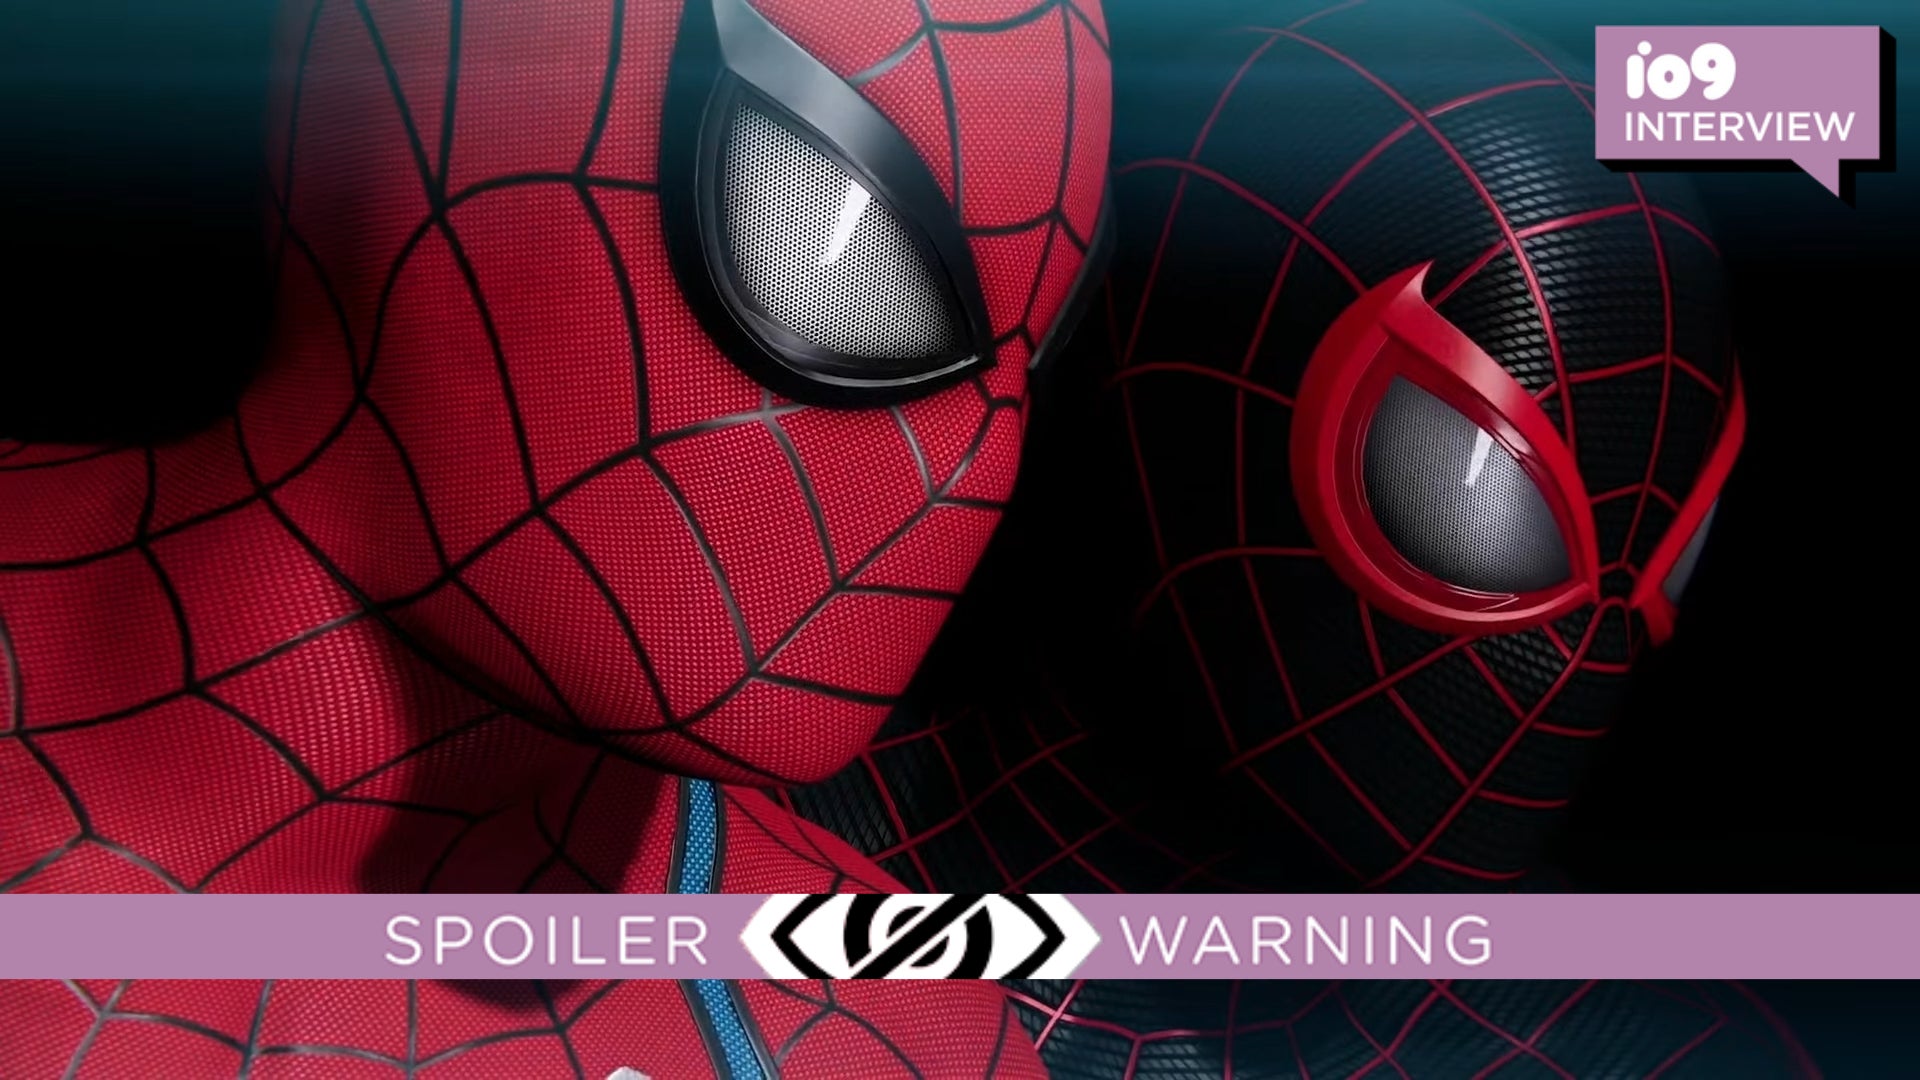 Marvel's Spider-Man 2: The Story So Far